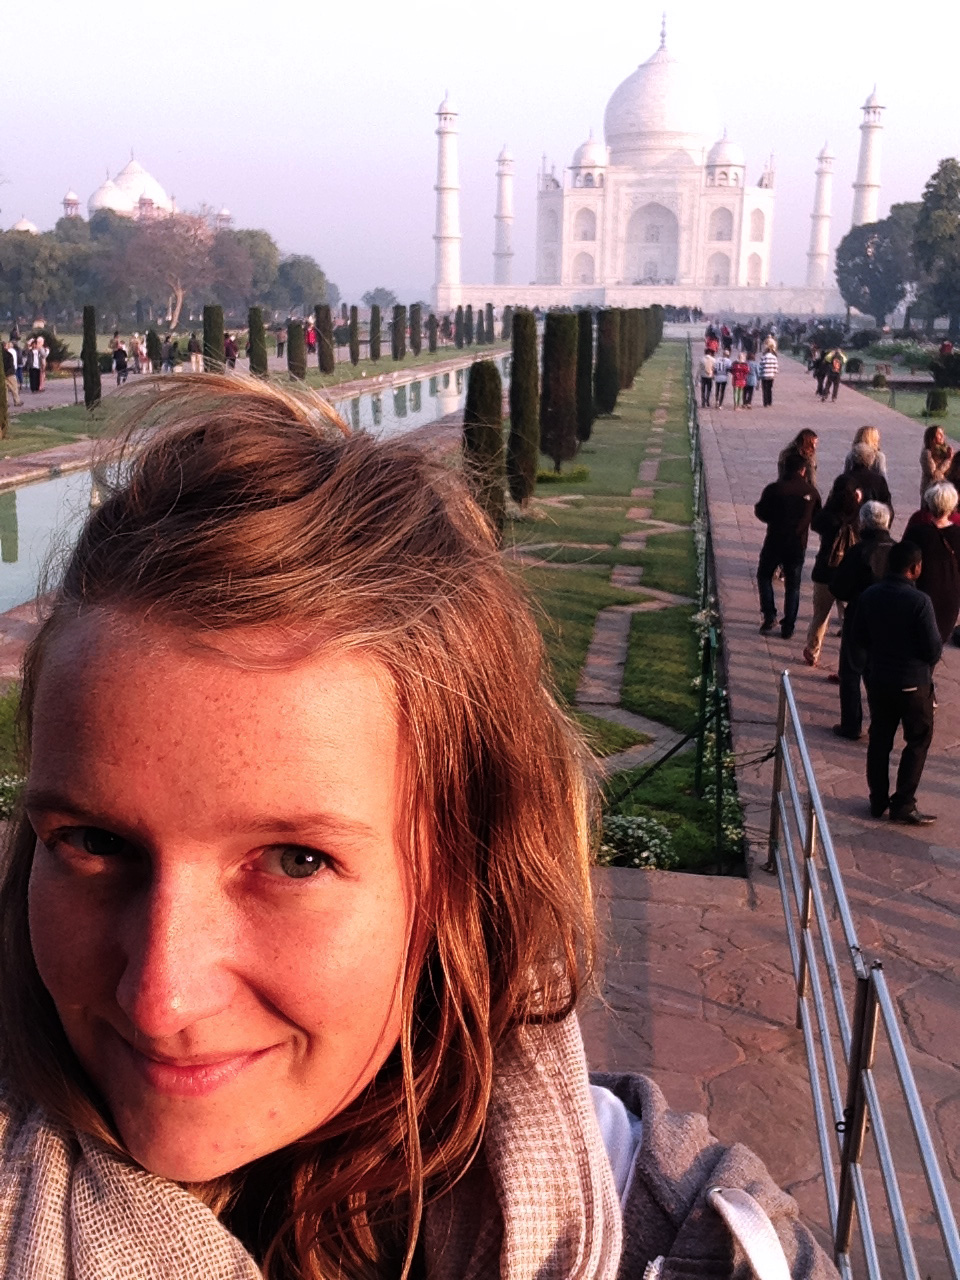 Clare from The Wayfarer Diaries at the Taj Mahal in India